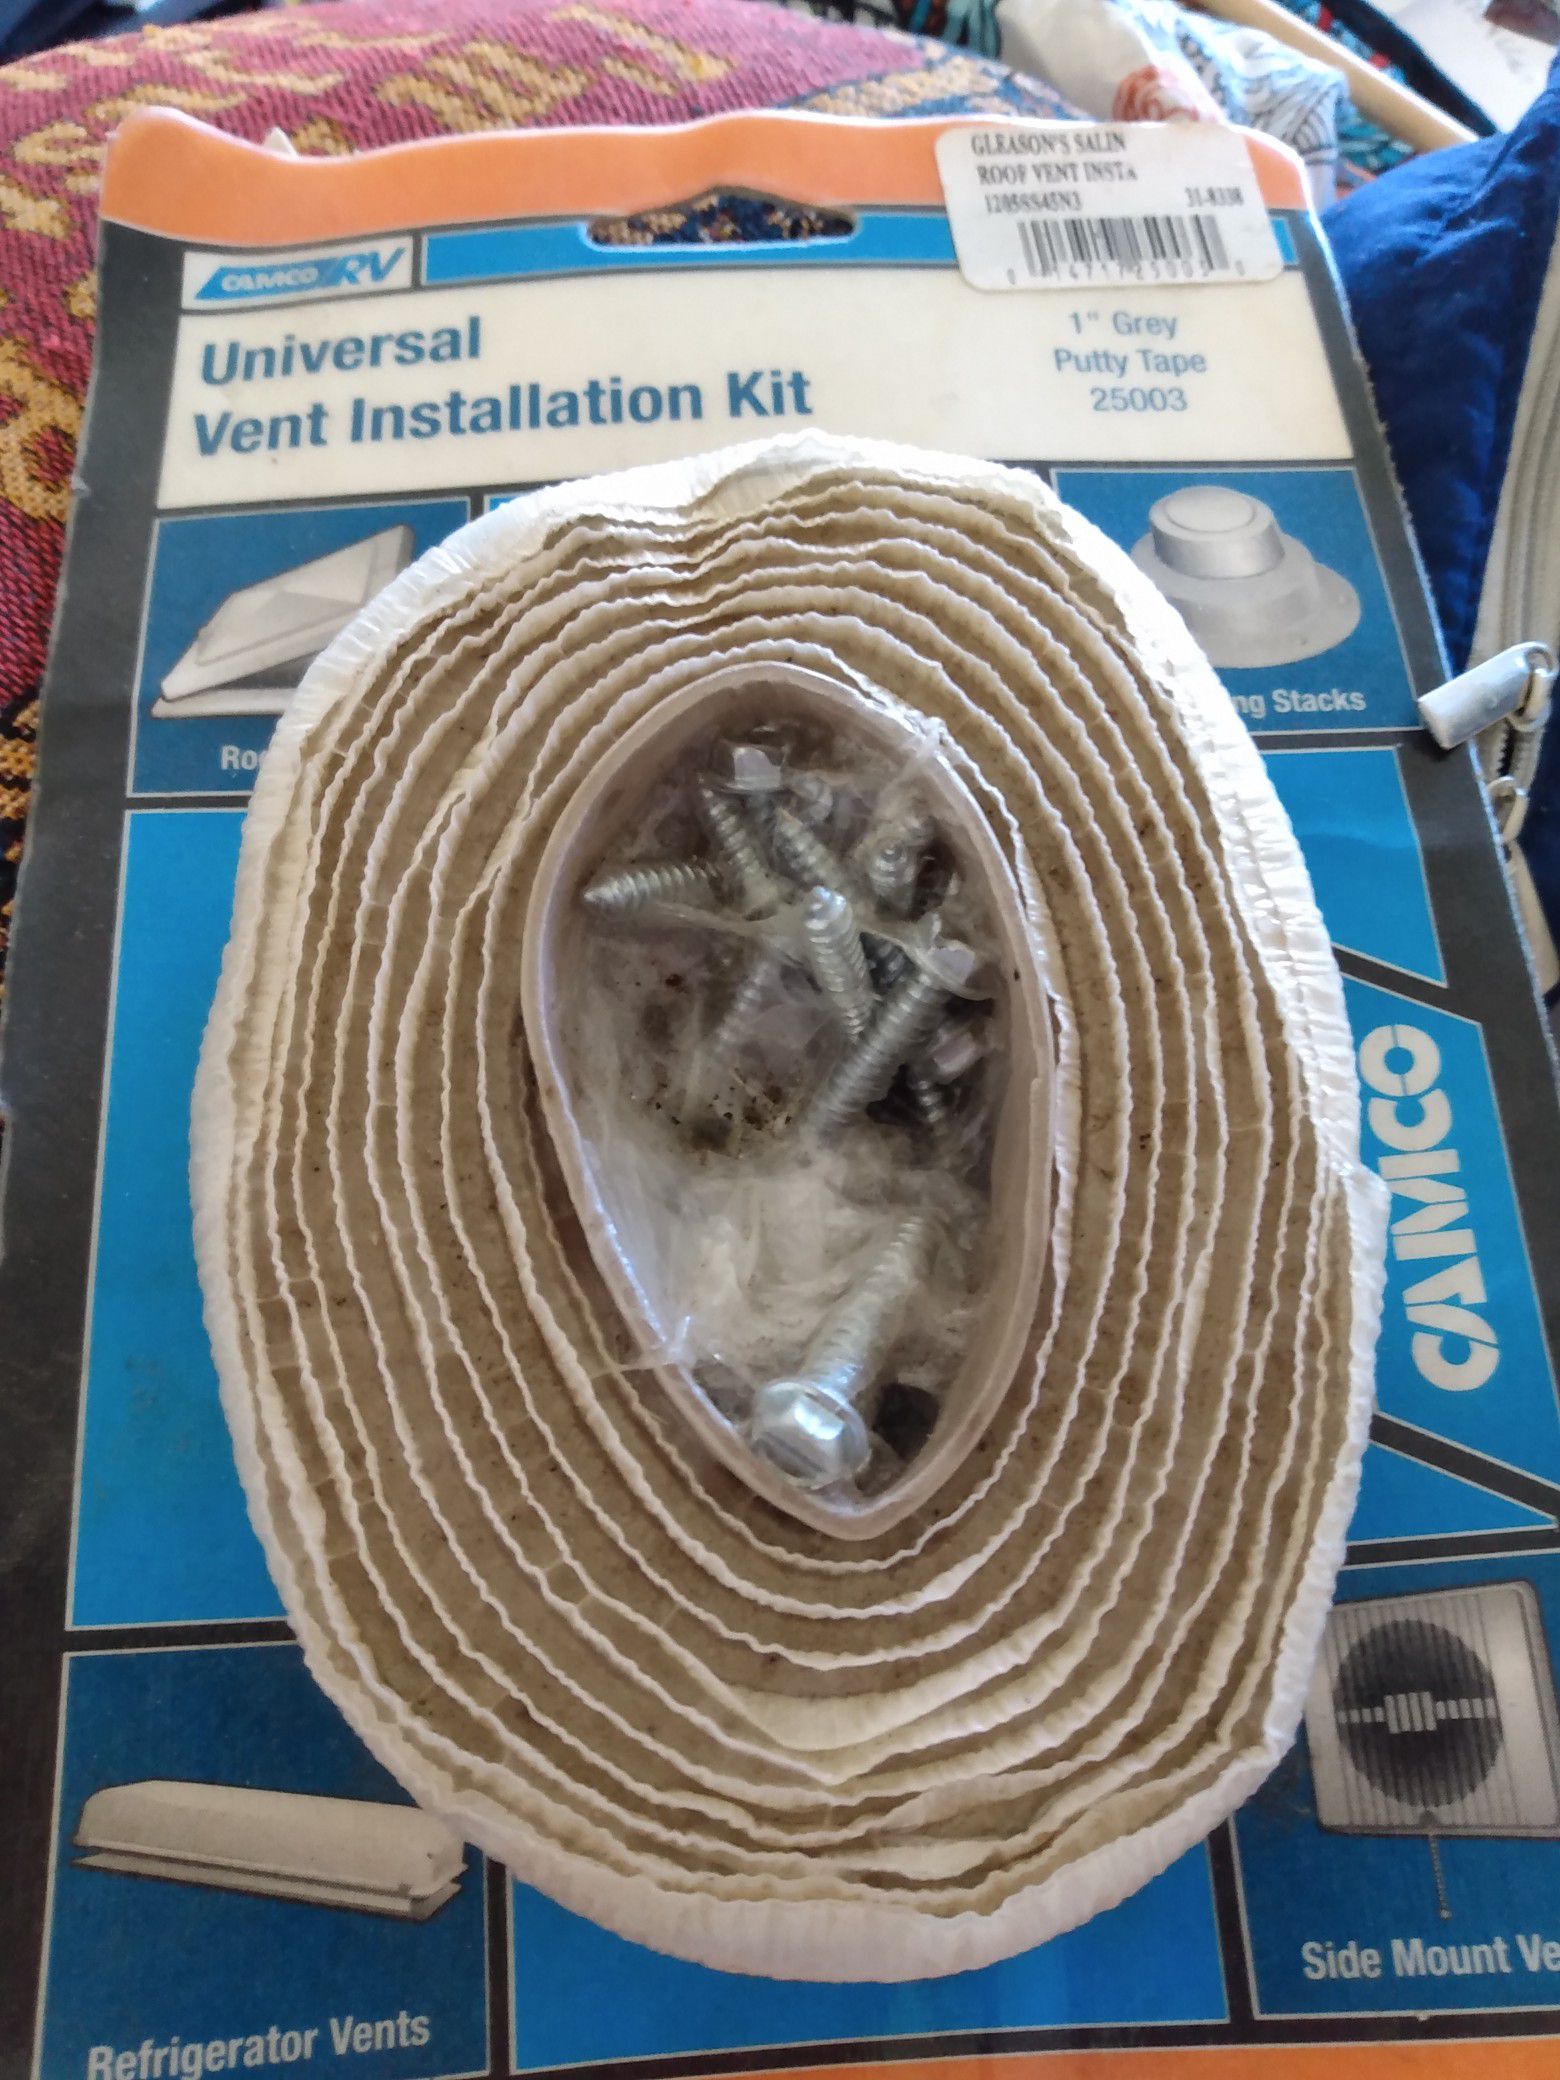 Universal vent installation kit